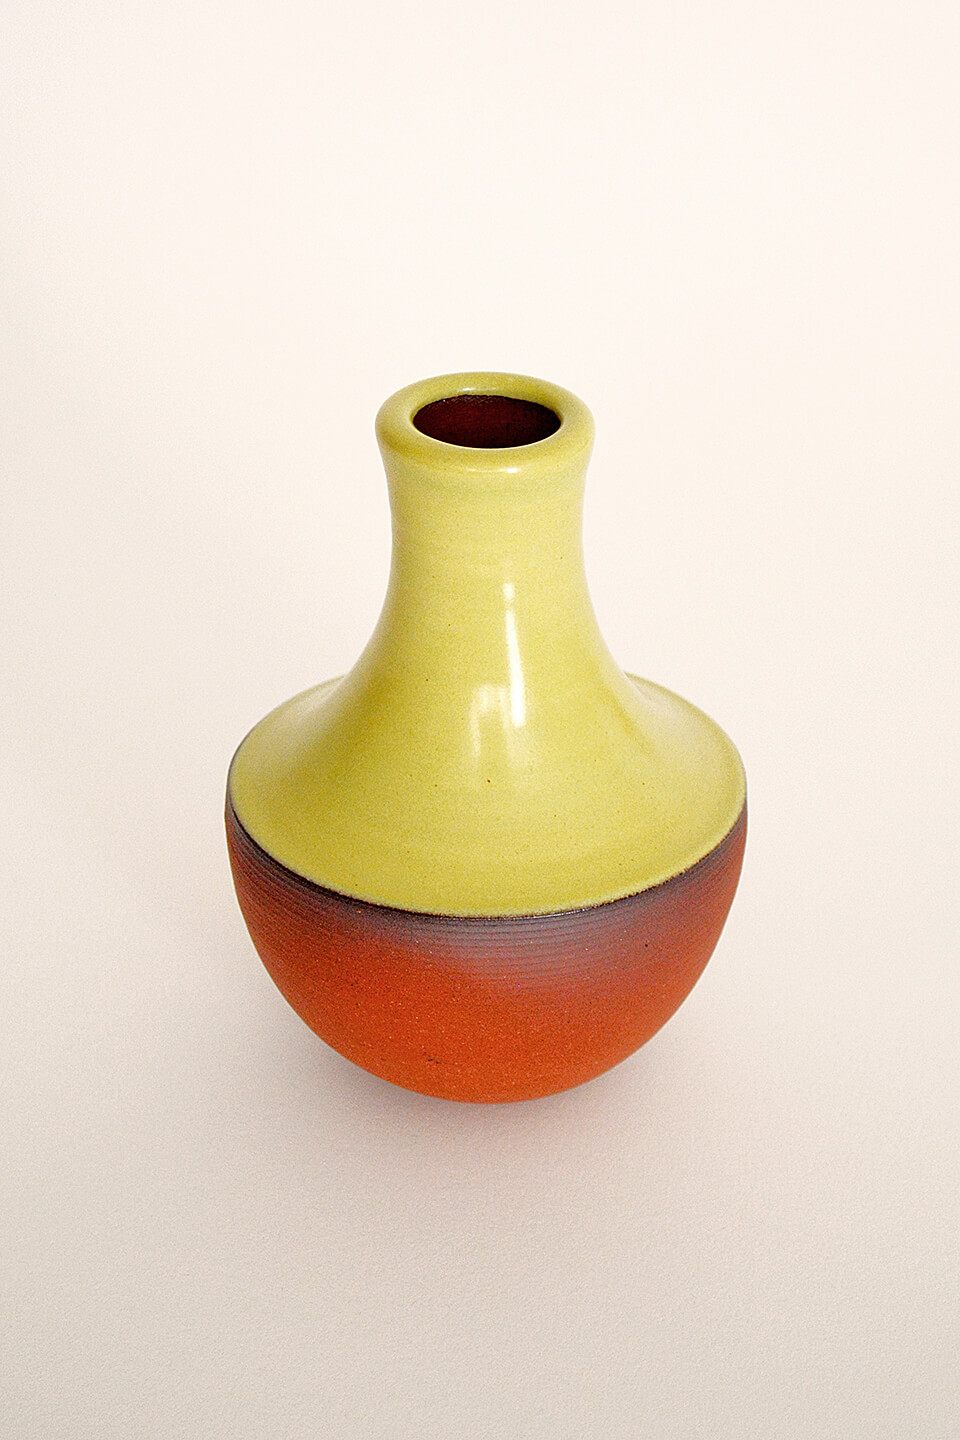 Satin Yellow Green Ceramic Vase No. 620